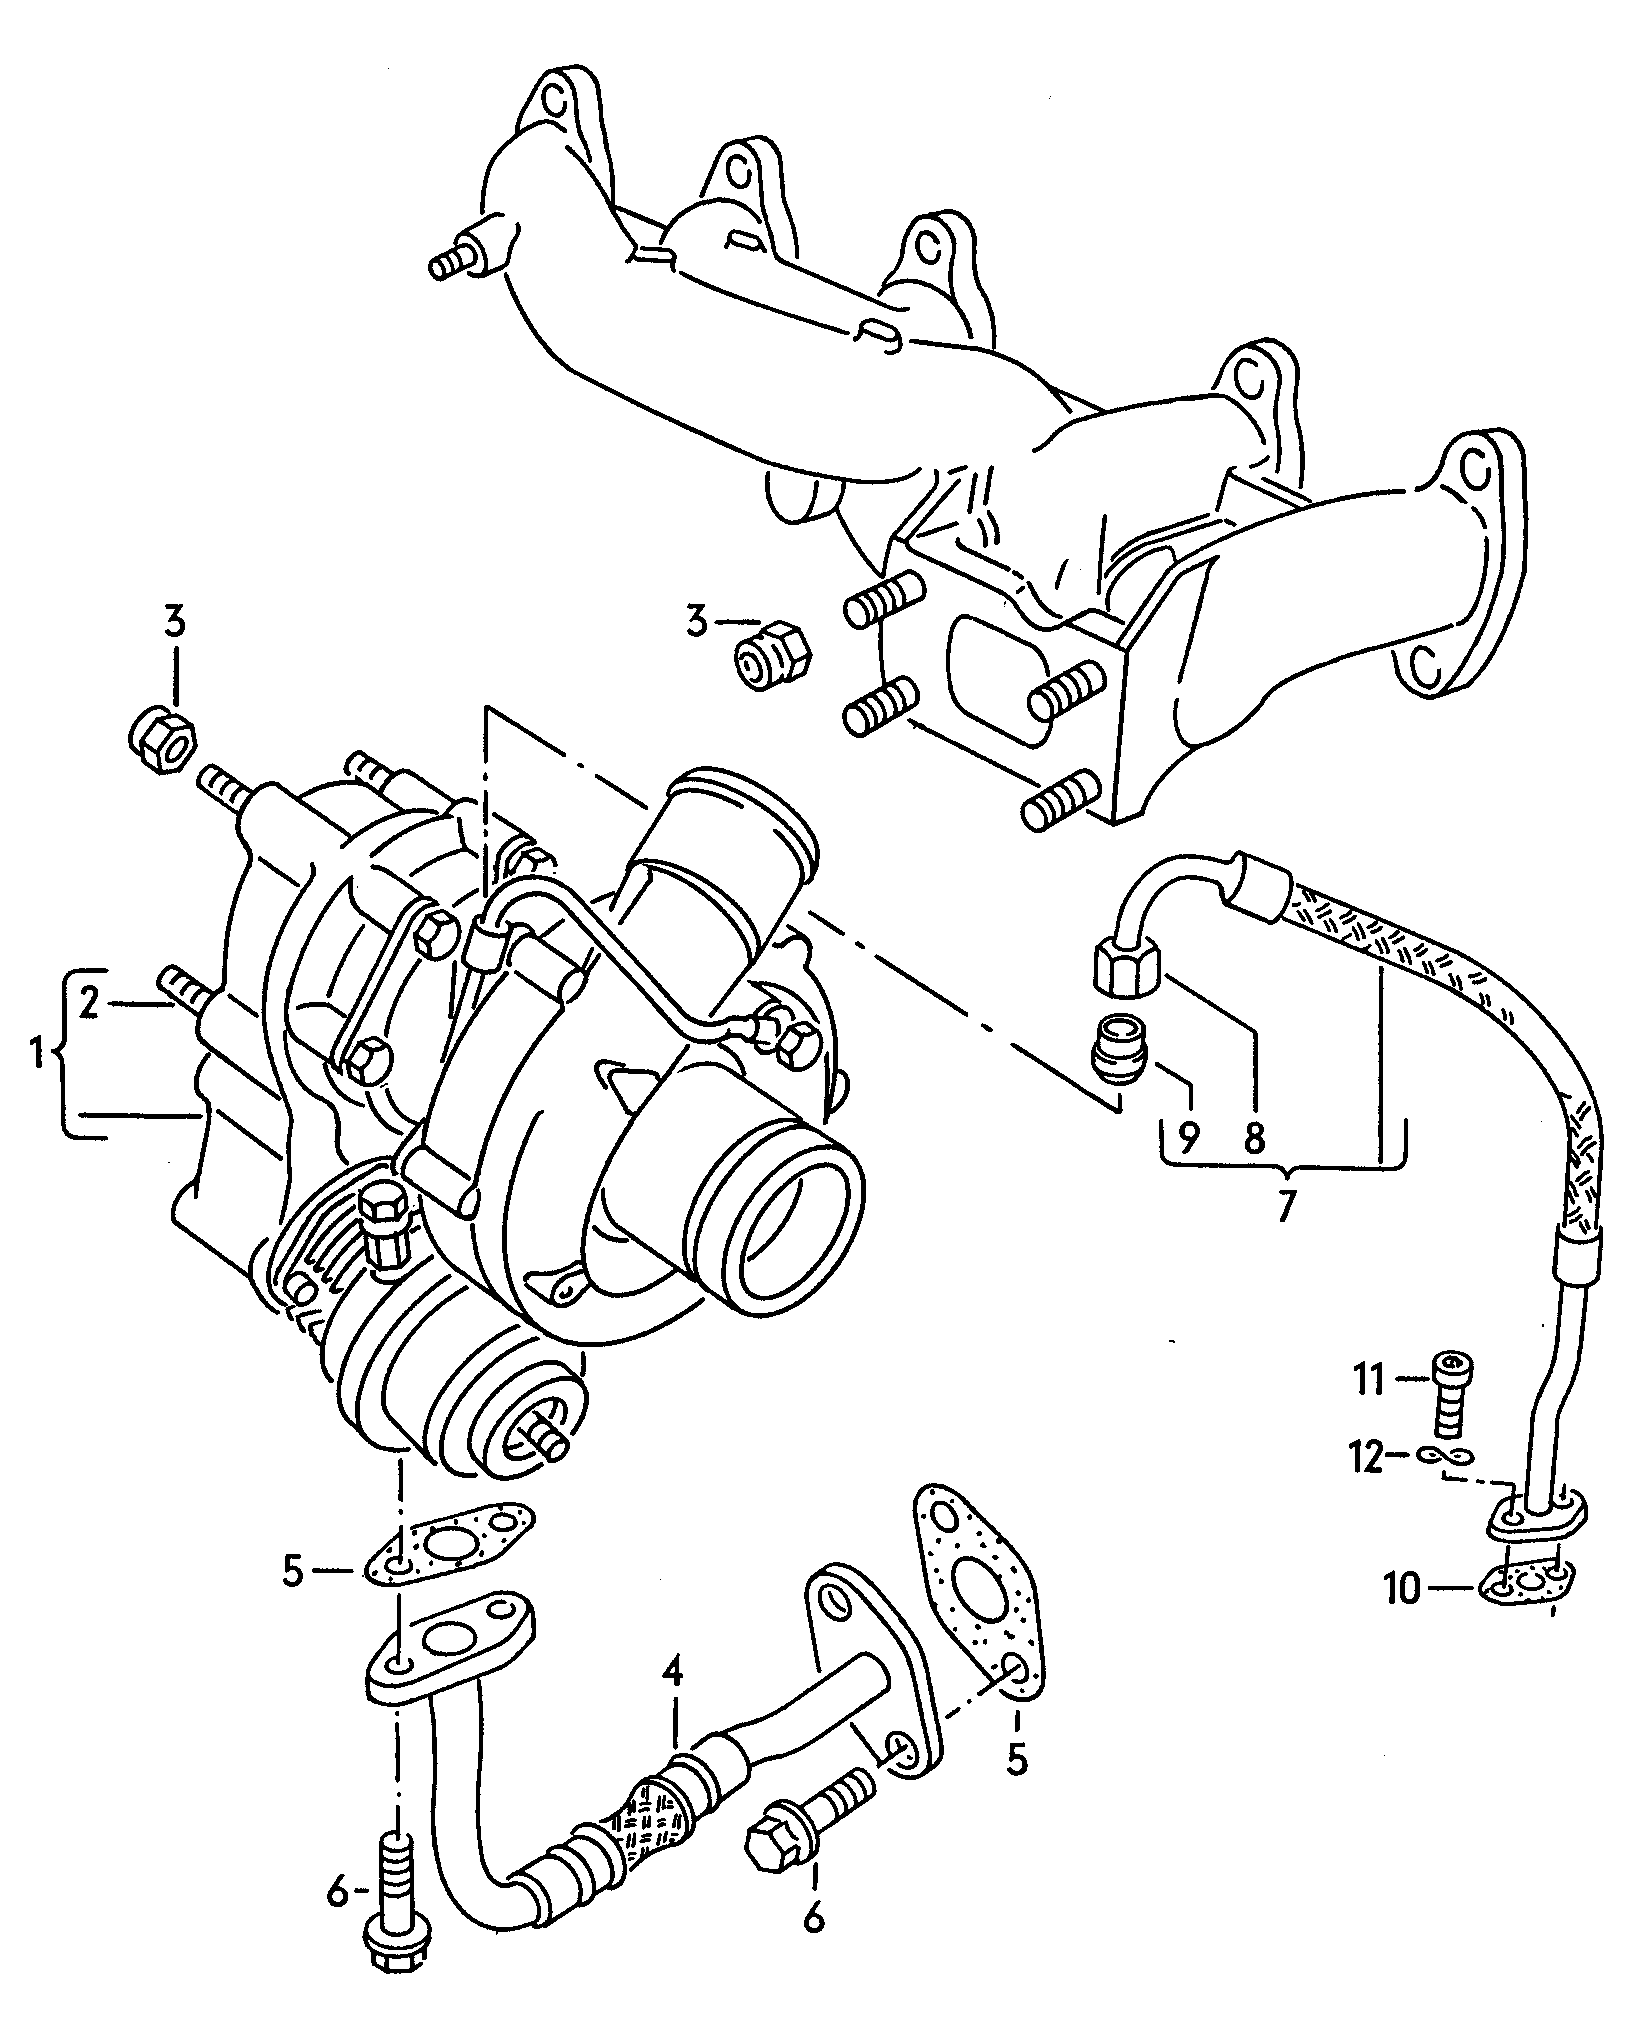 Exhaust gas turbocharger 2.0 Ltr. - Audi 100 - a10